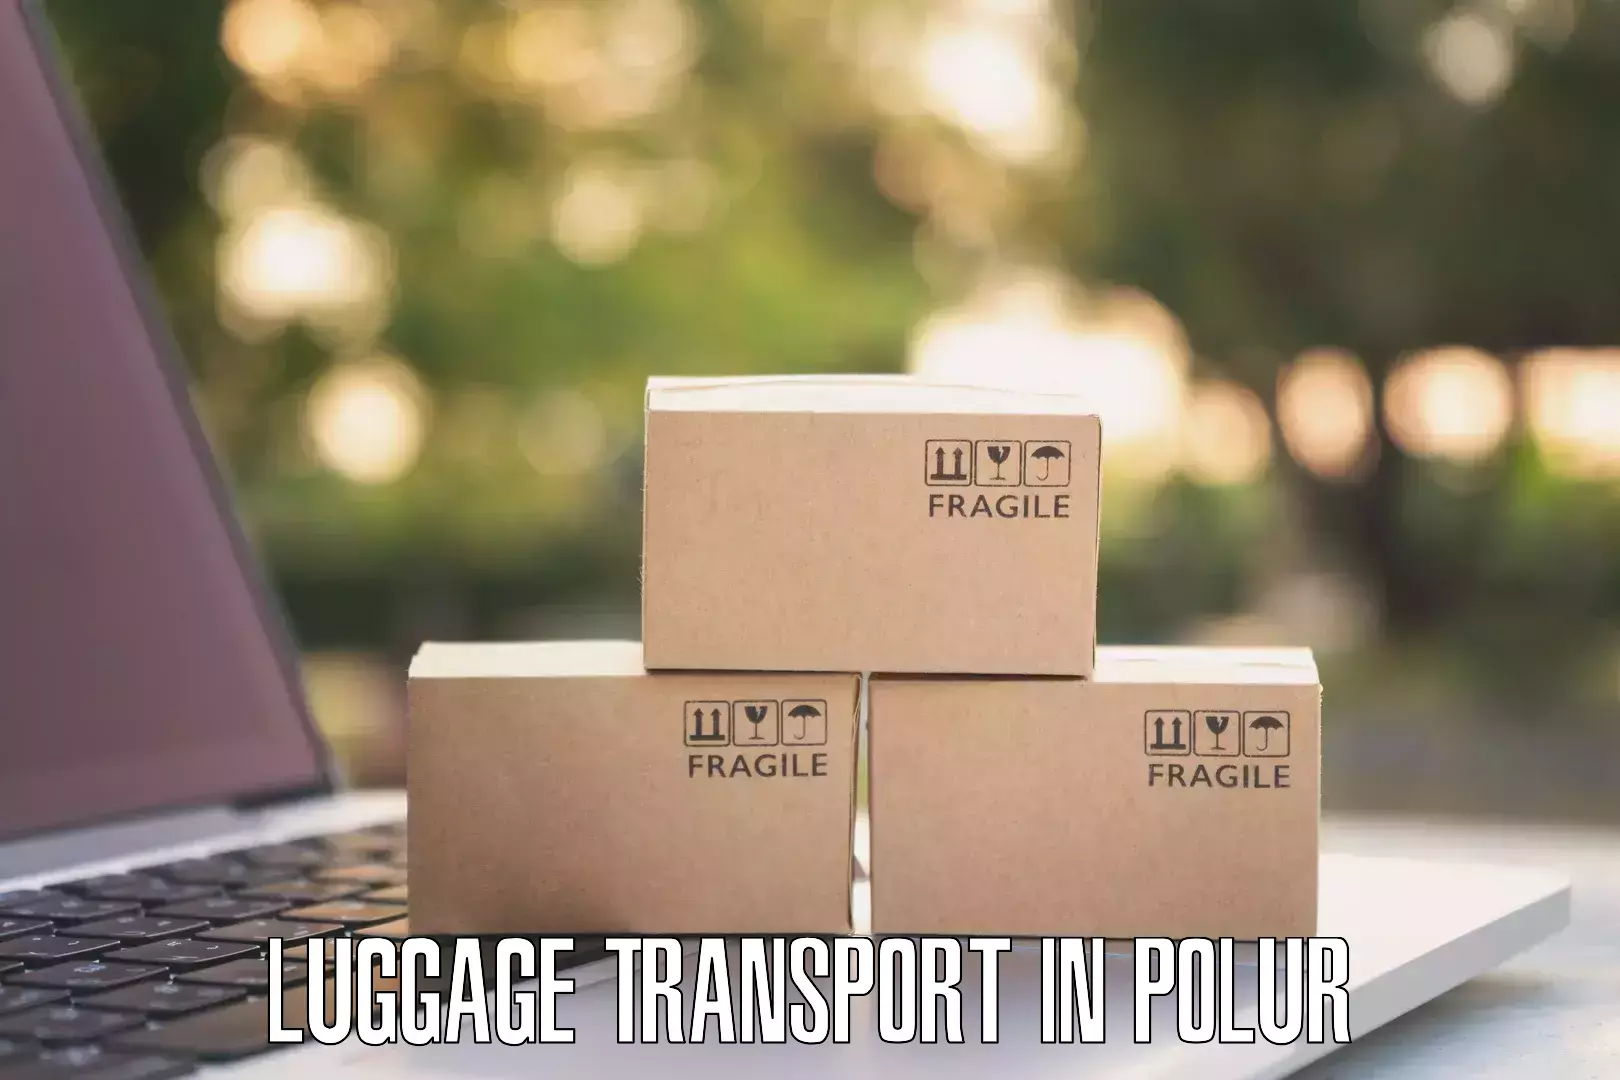 Luggage transport service in Polur